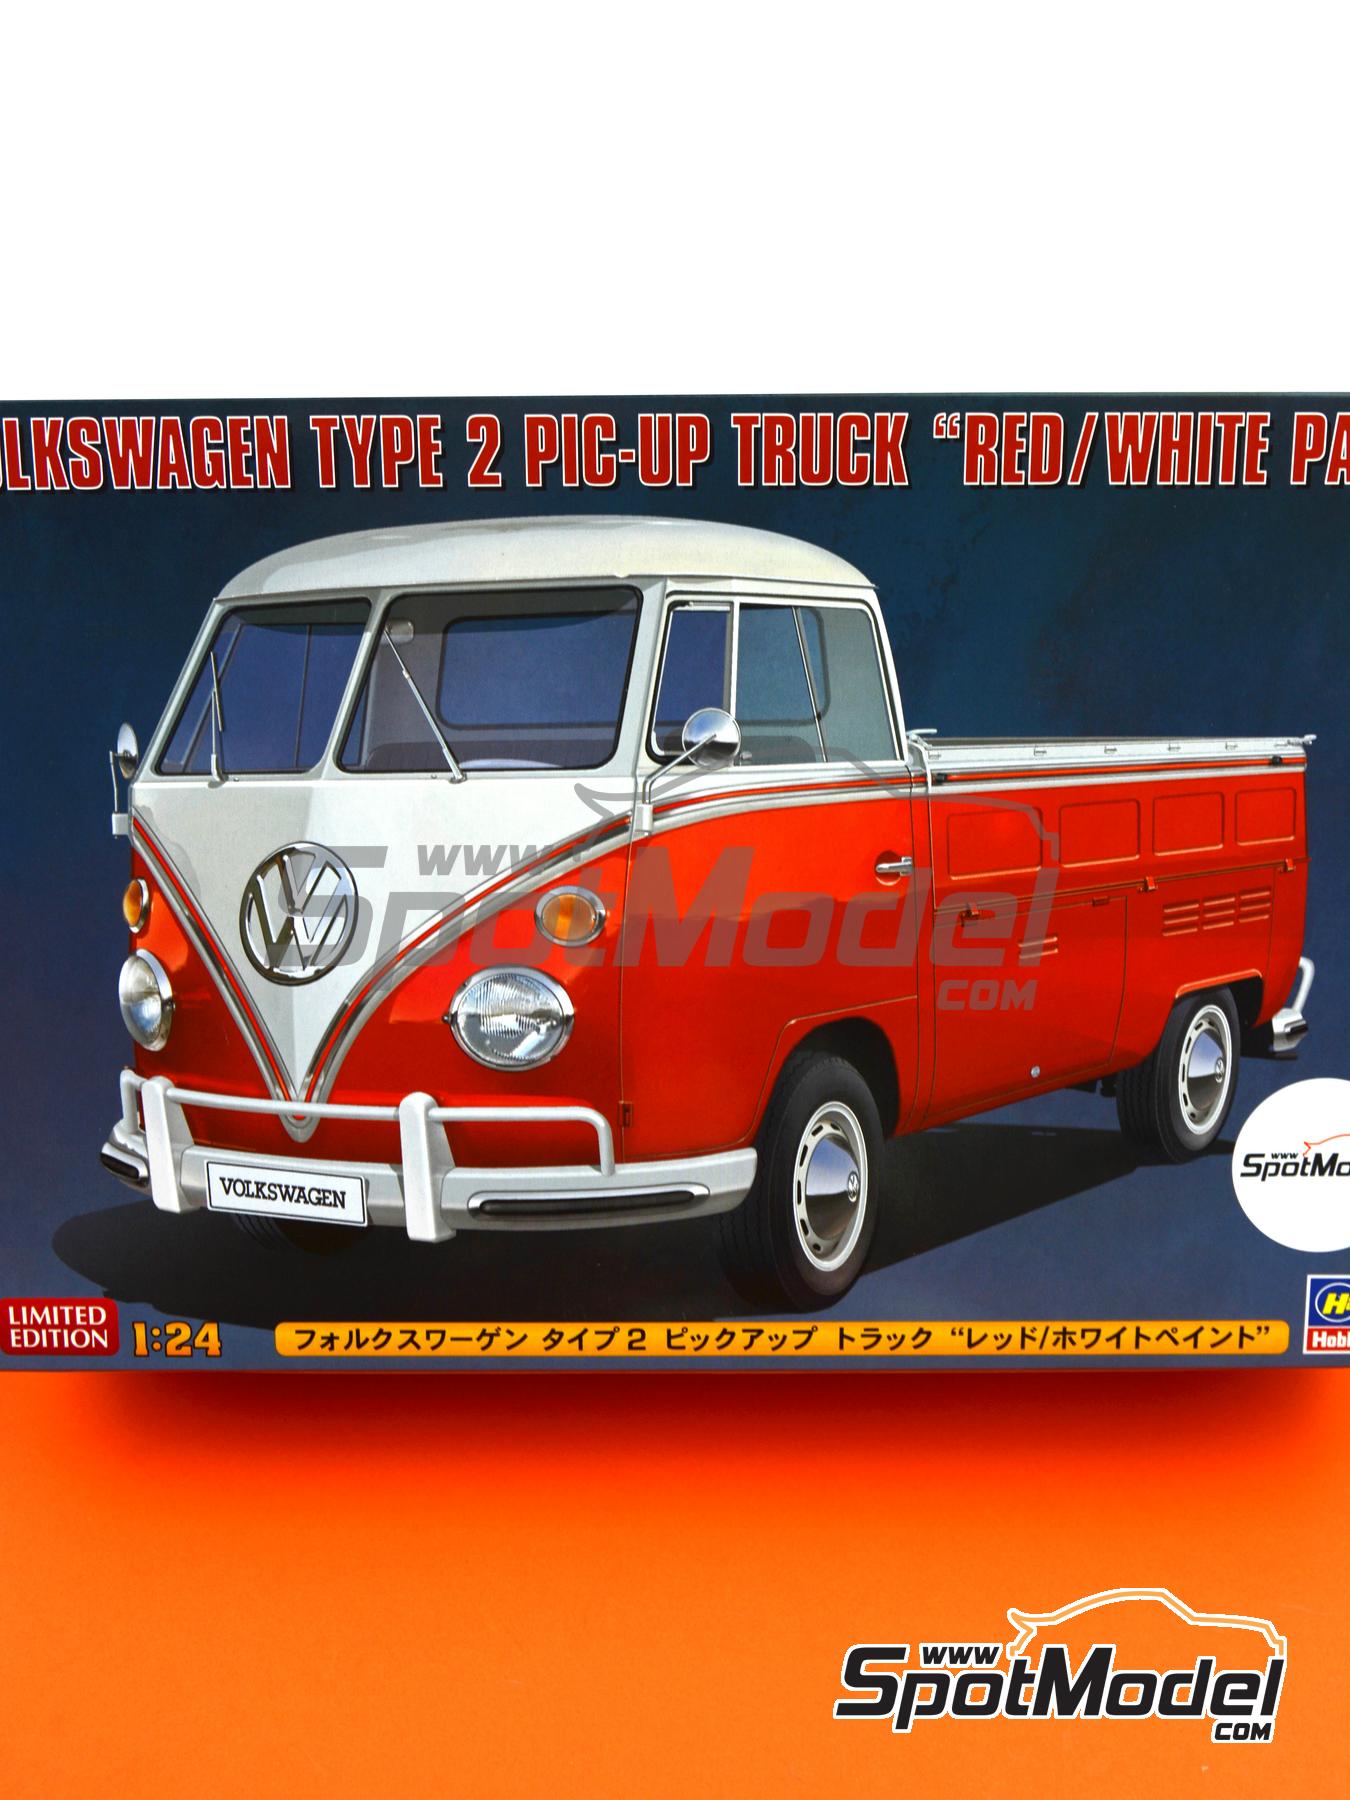 Madness-Two-Tone-Ska-80s-Car-Van-Pick Up-Truck-Wall-Door-Art-Decal-Sticker. 